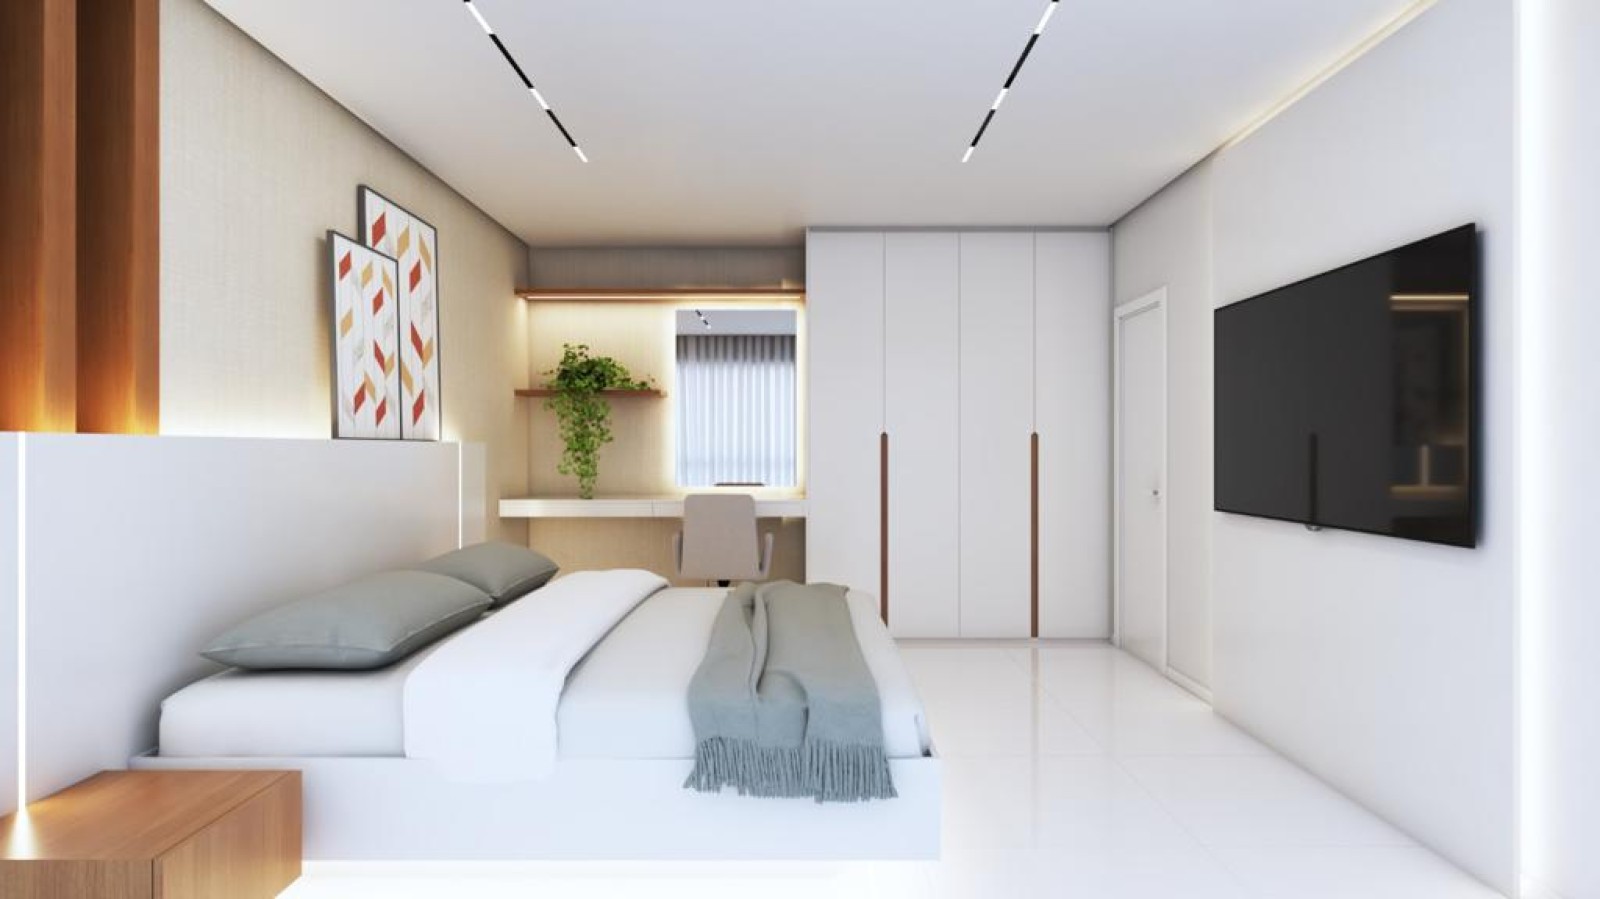 3 Bedroom Luxury House, for sale, in Portimão, Algarve_224580